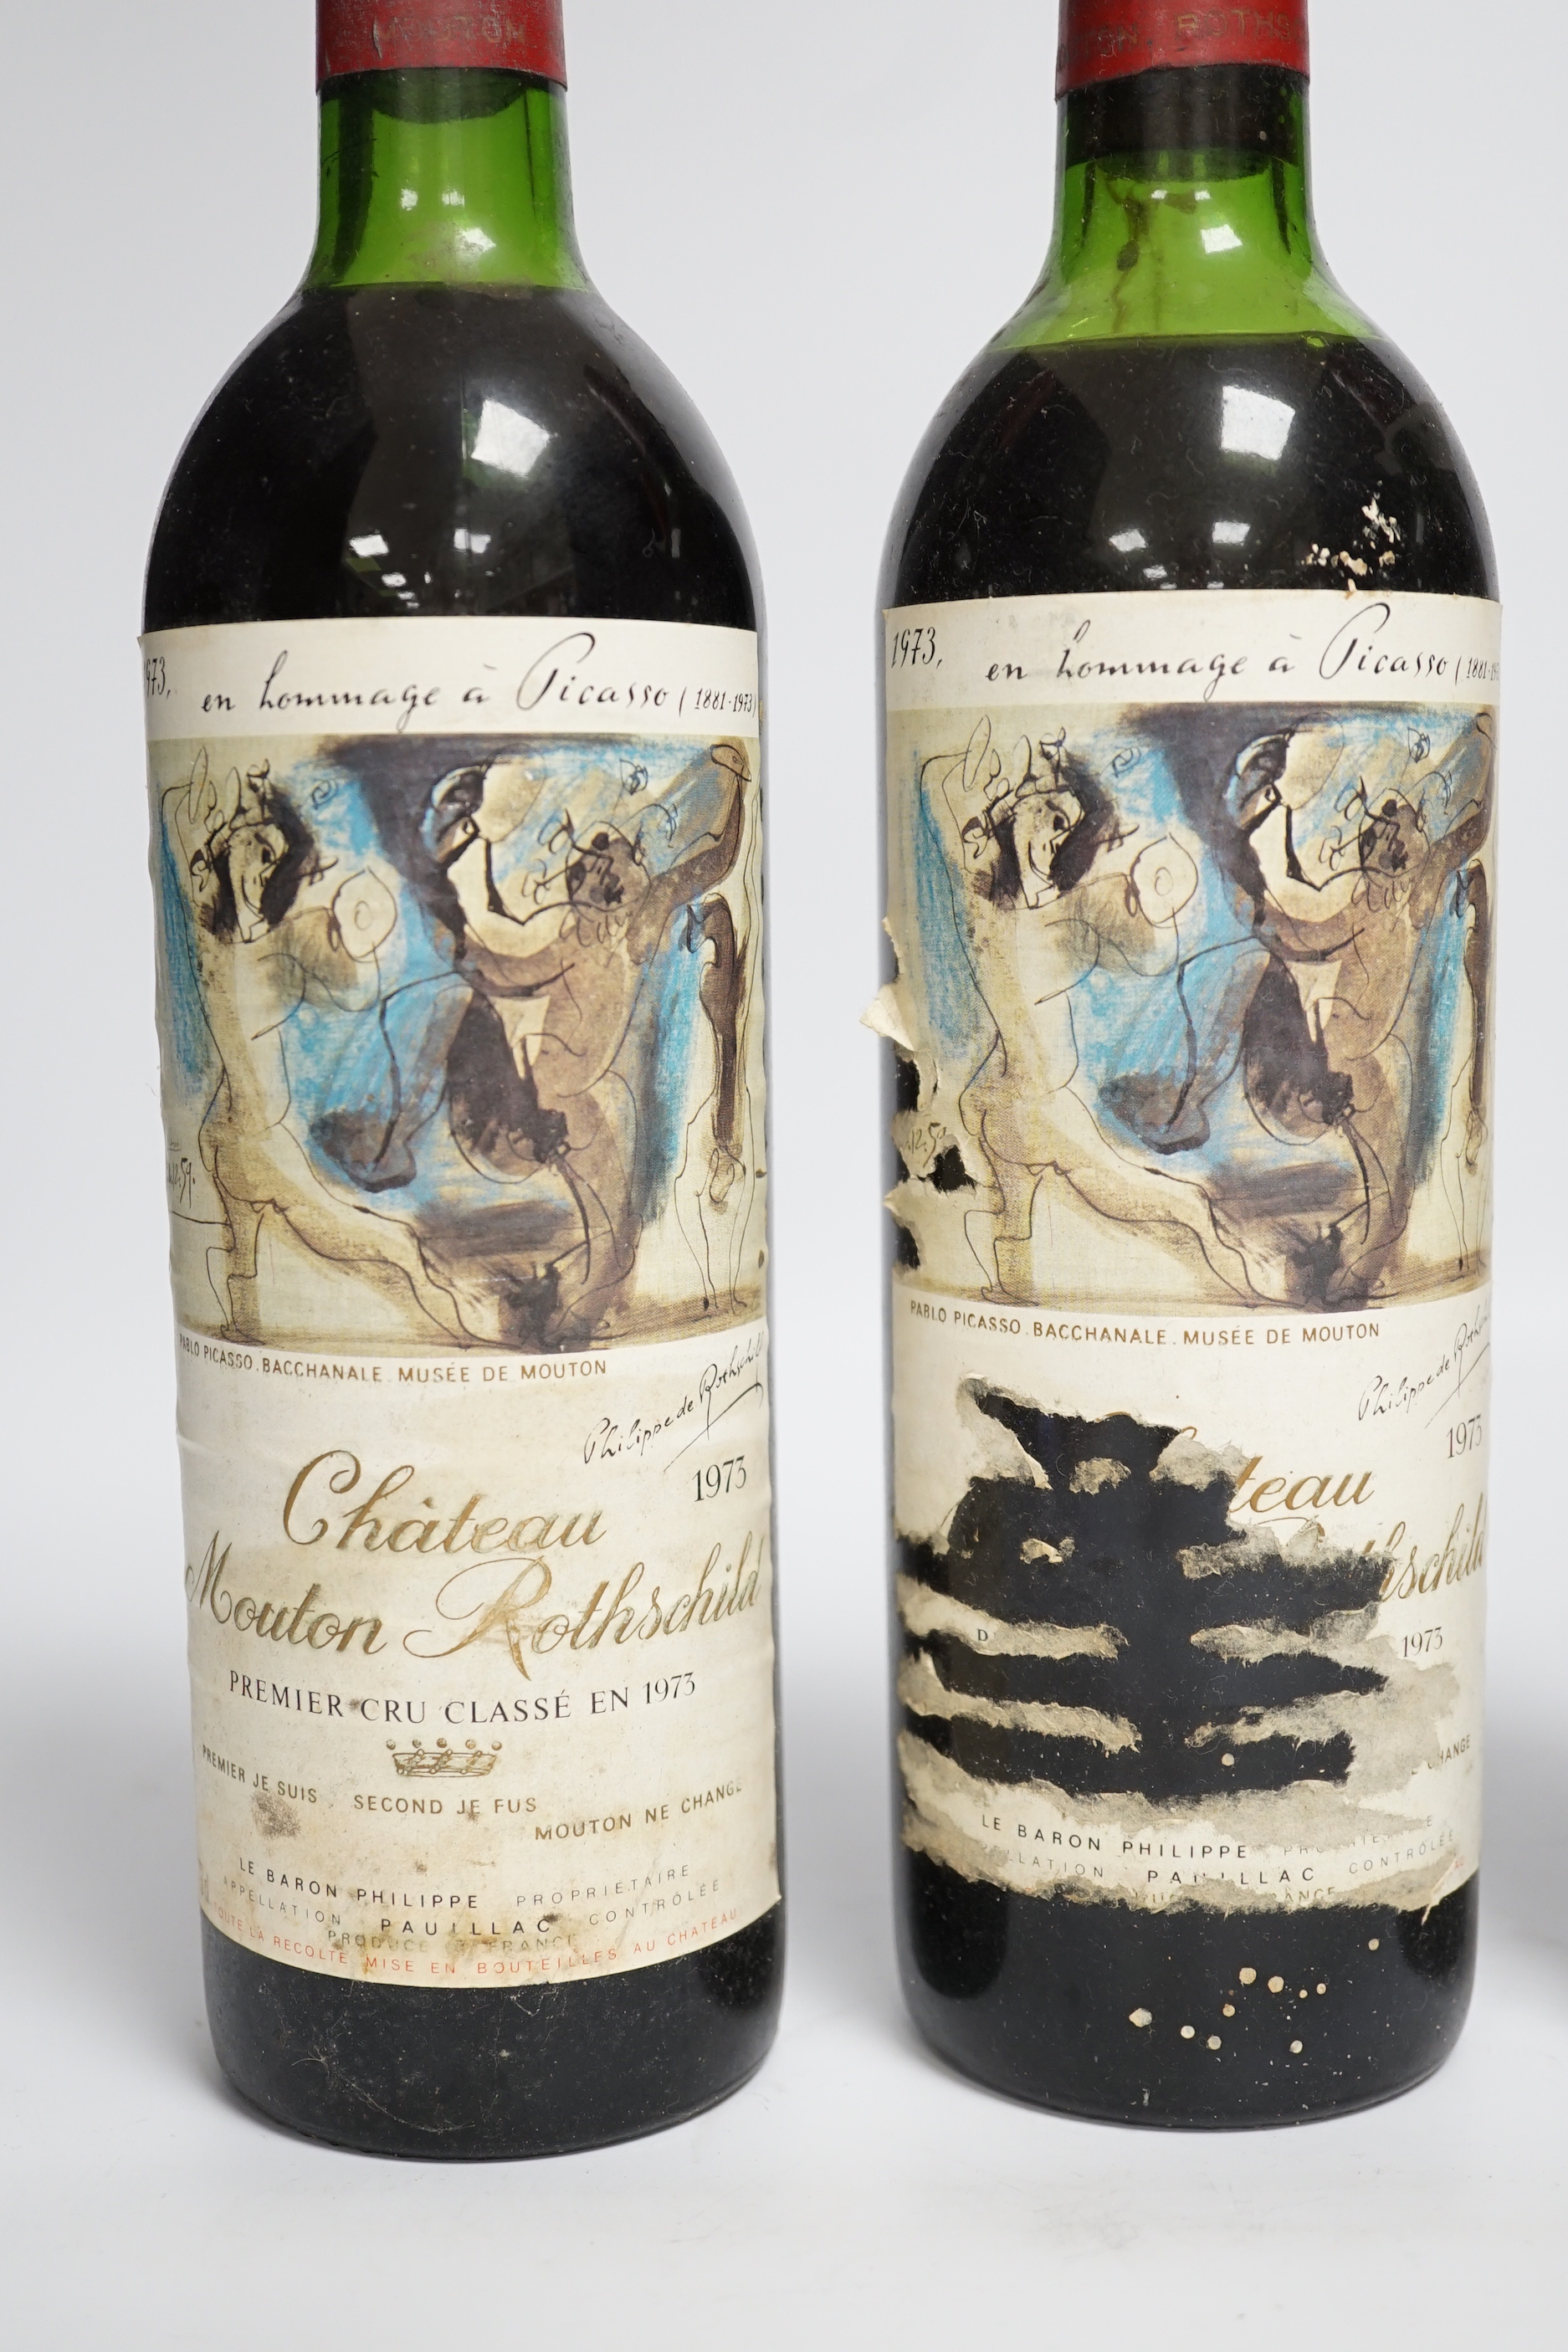 Three bottles of Chateau Mouton Rothschild, premiere cru classe 1973